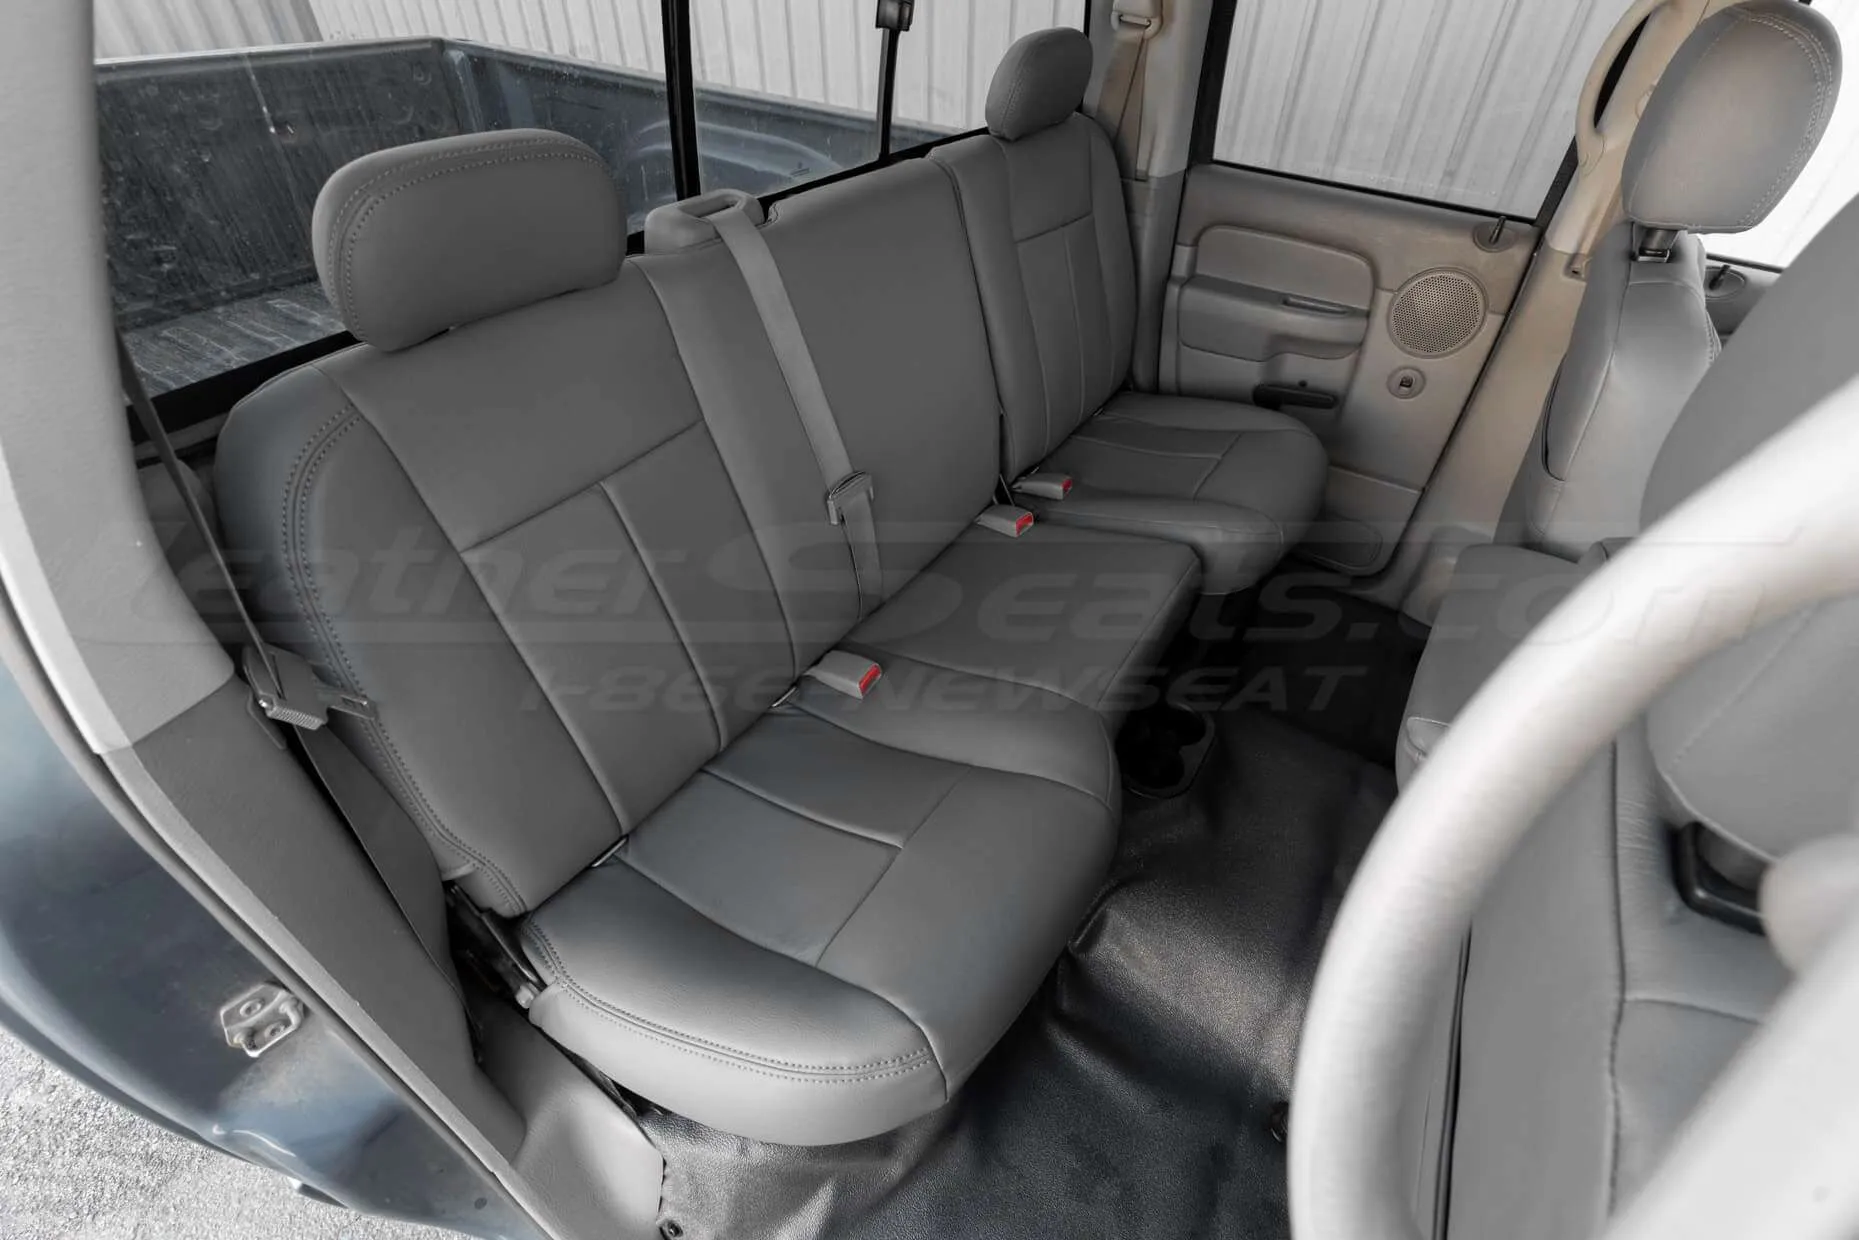 2003-2005 Dodge Ram Quad Cab 2500 Install Rear Seats from passenger side- Light Grey